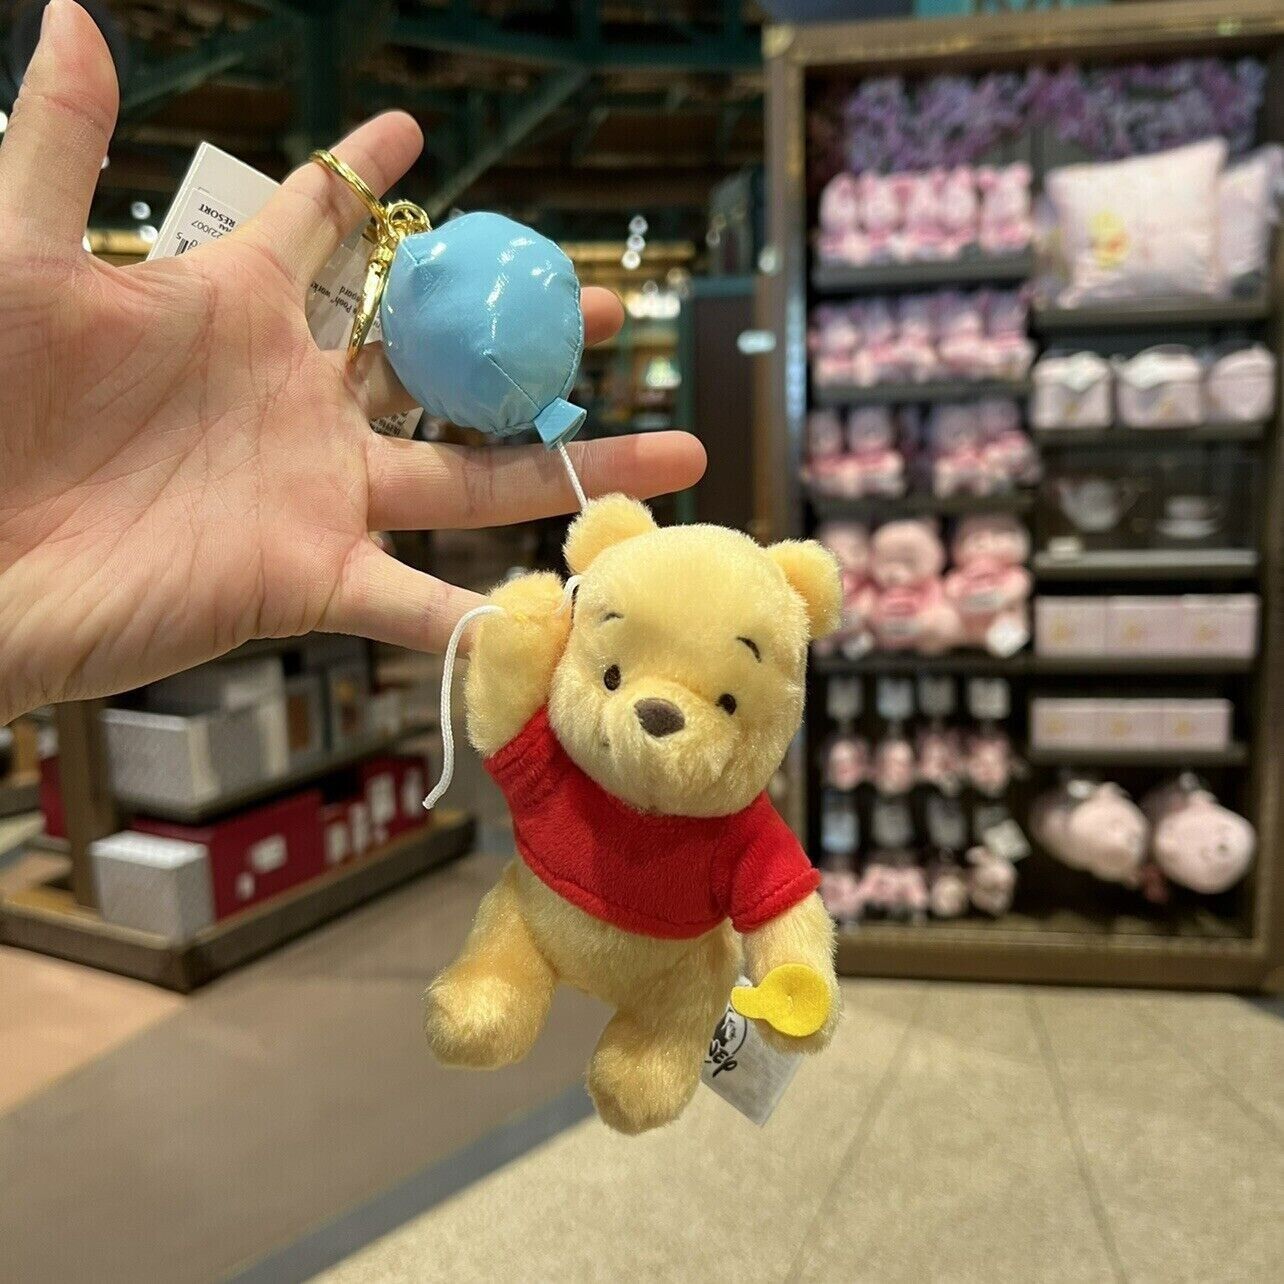 Authentic Disney Shanghai Winnie the pooh Balloon Plush doll keychain ornament